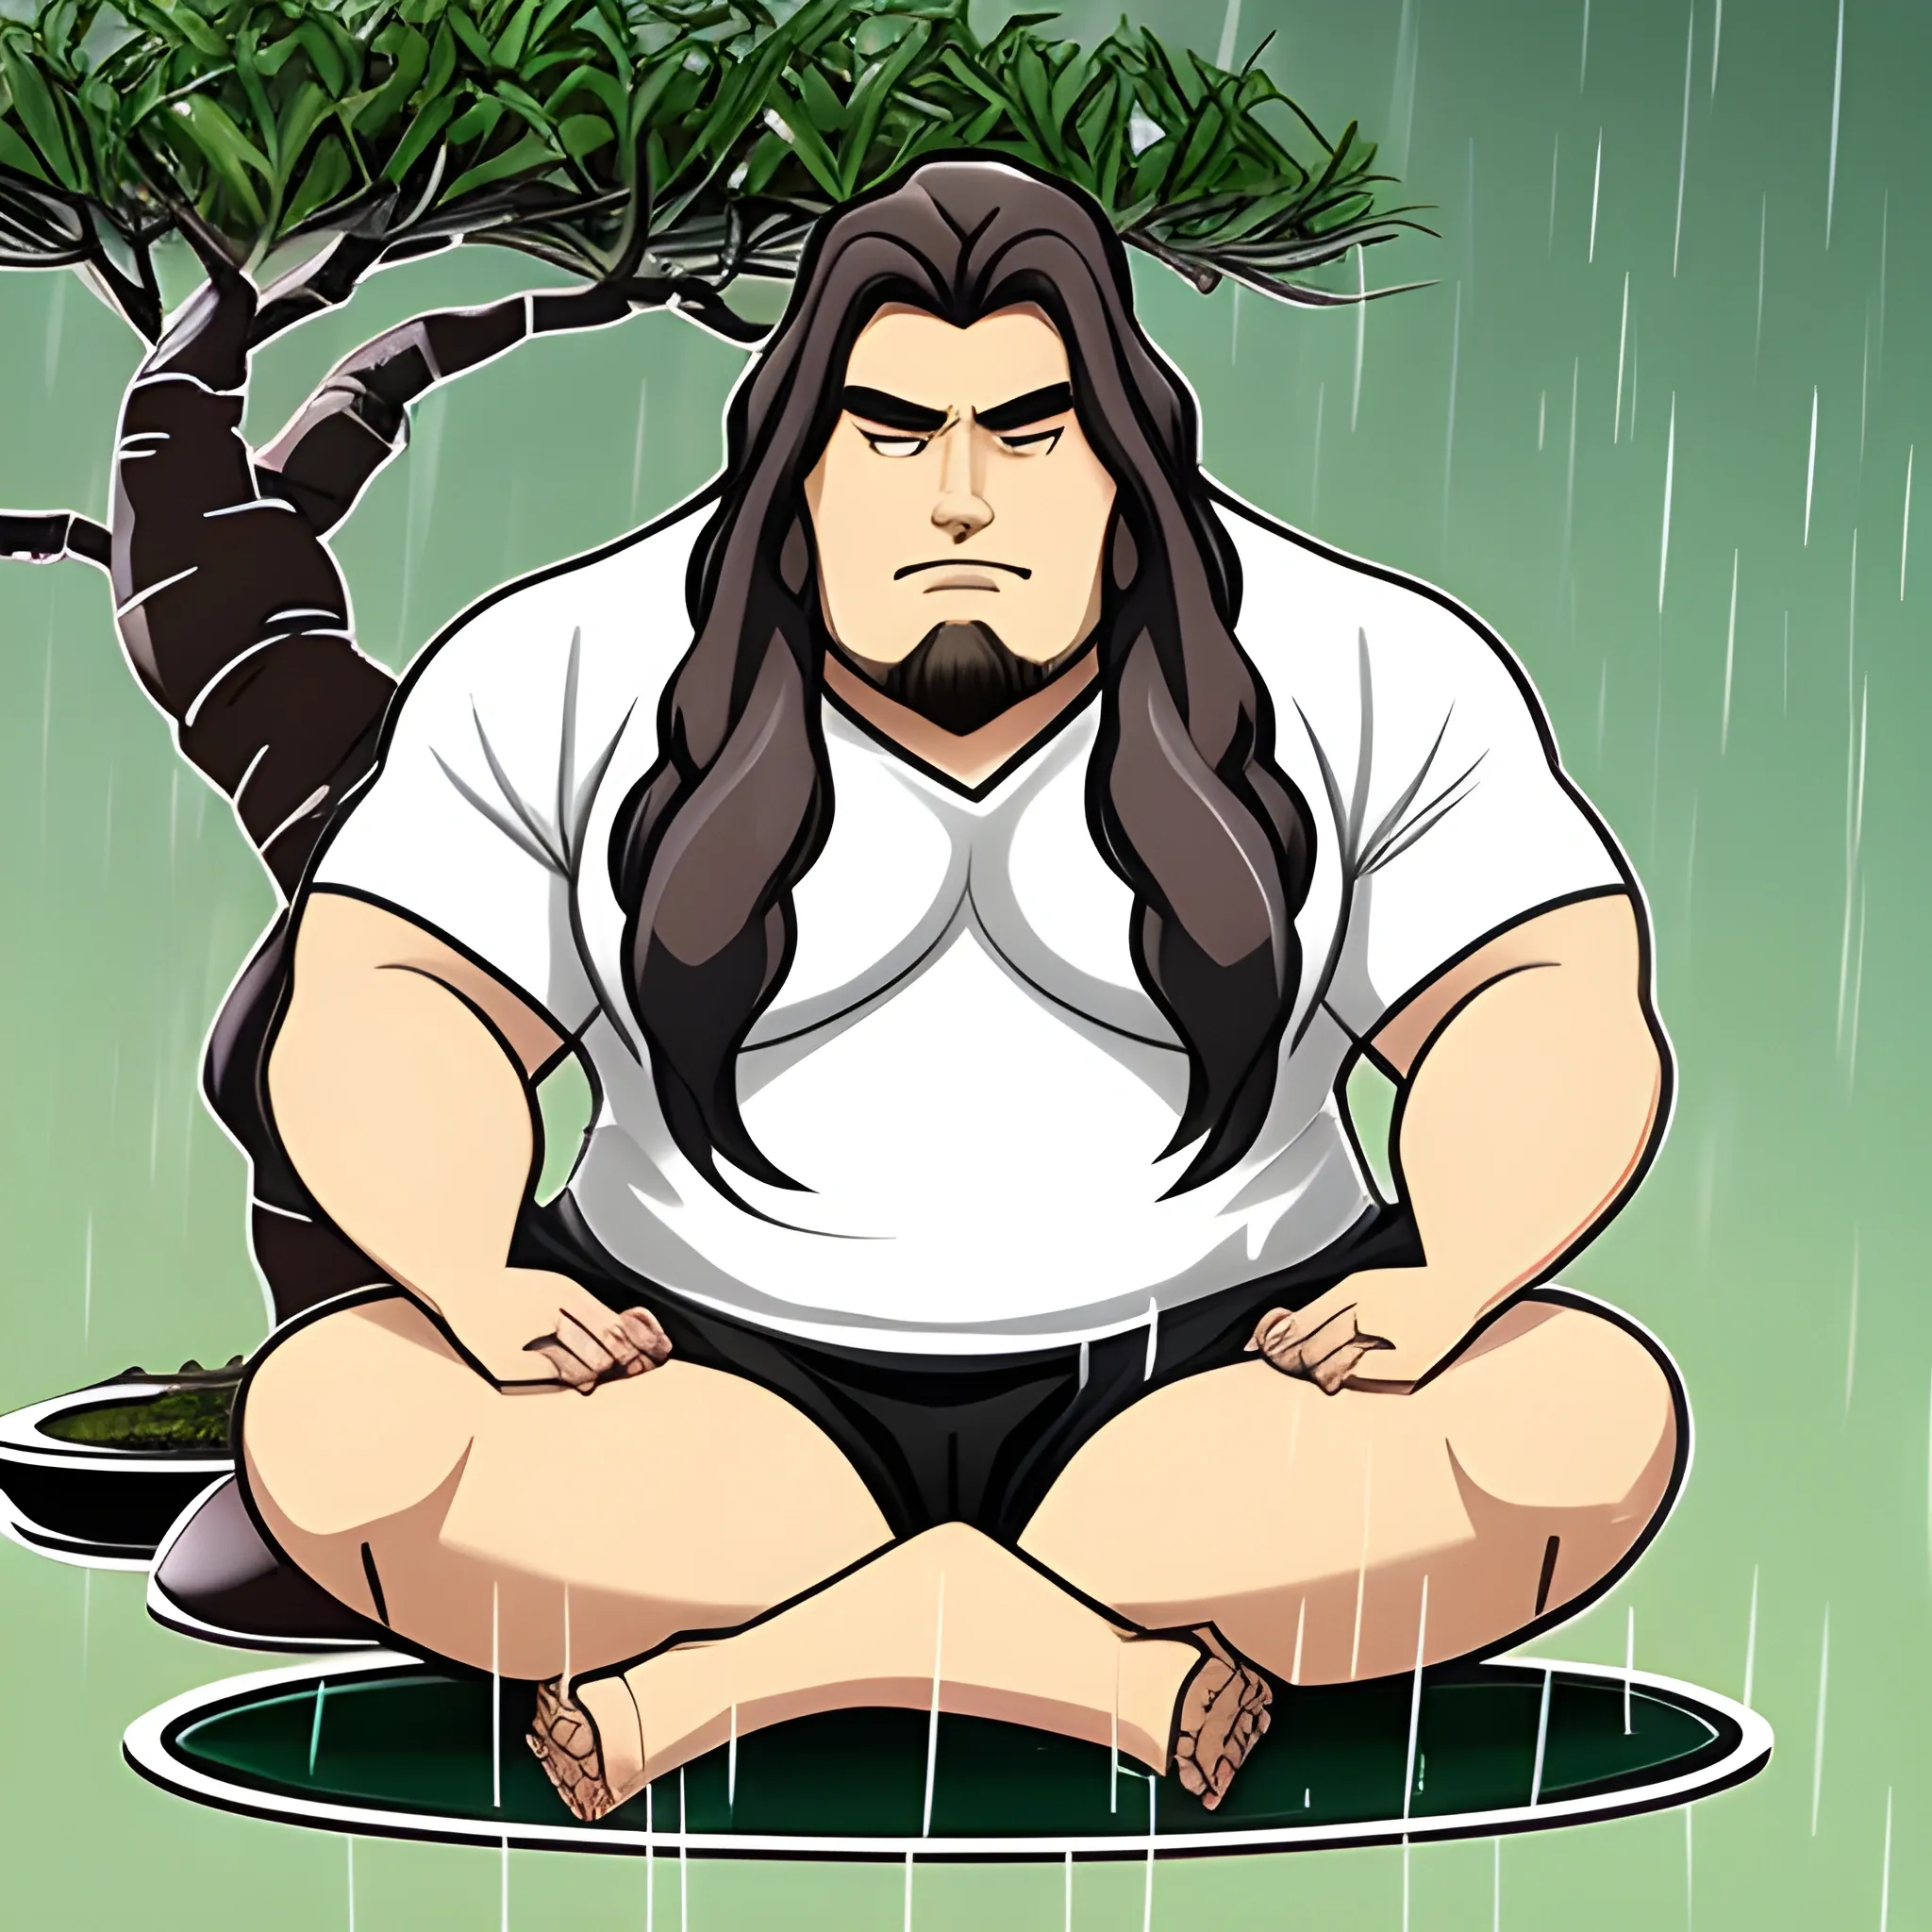 a big man with long hair, wearing a white gym shirt,  sitting under the rain beside a bonsai tree, chibi style
